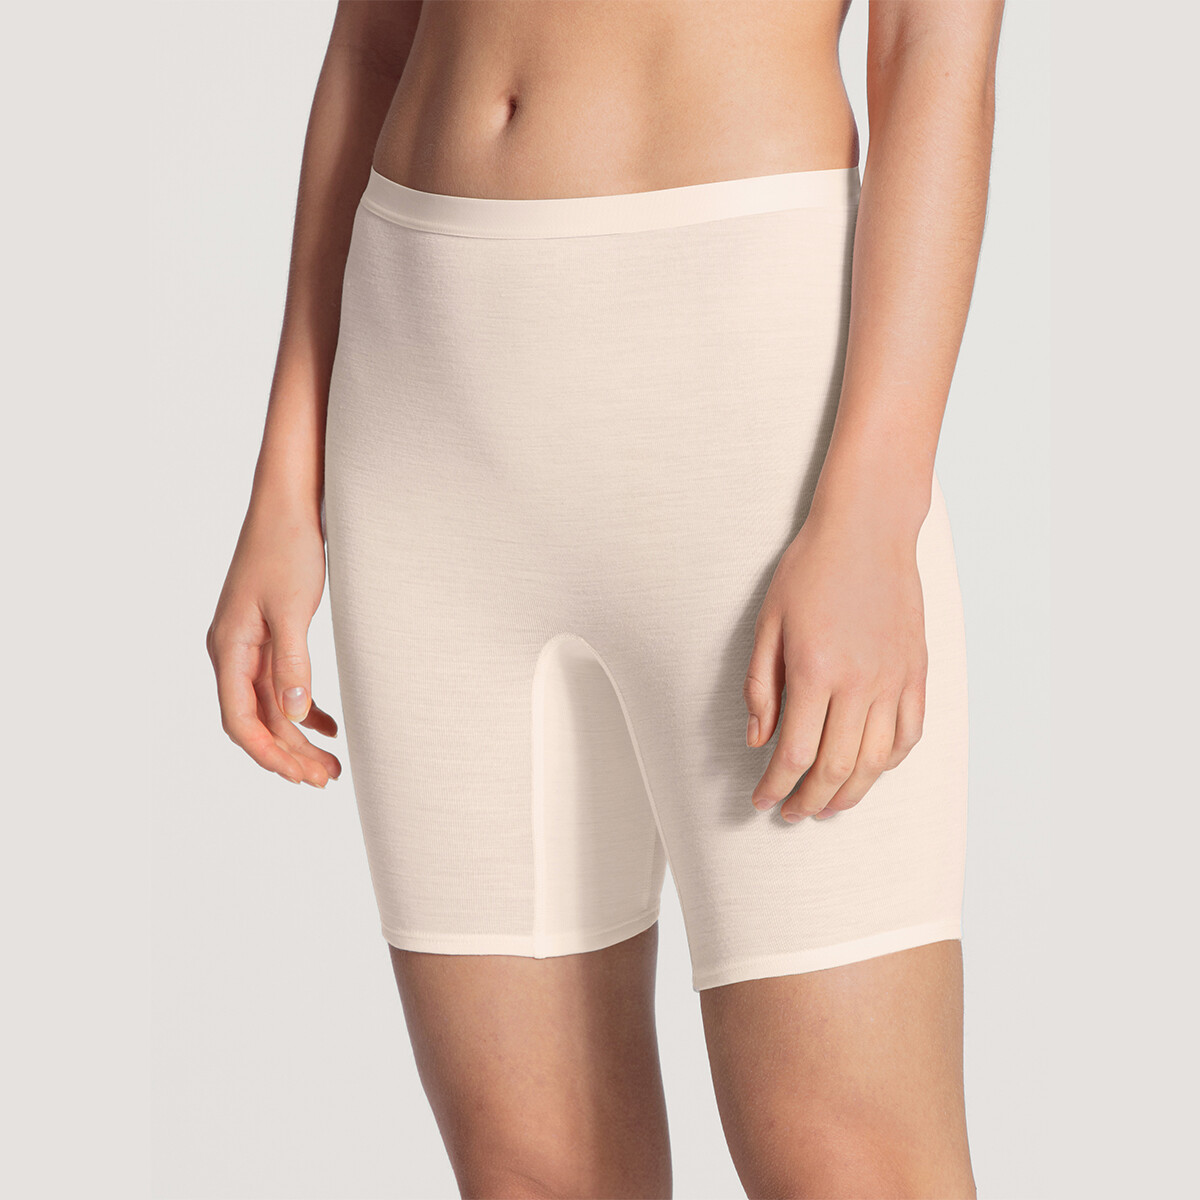 Se Calida Shorts, Farve: Light Hvid, Størrelse: XS, Dame hos Netlingeri.dk